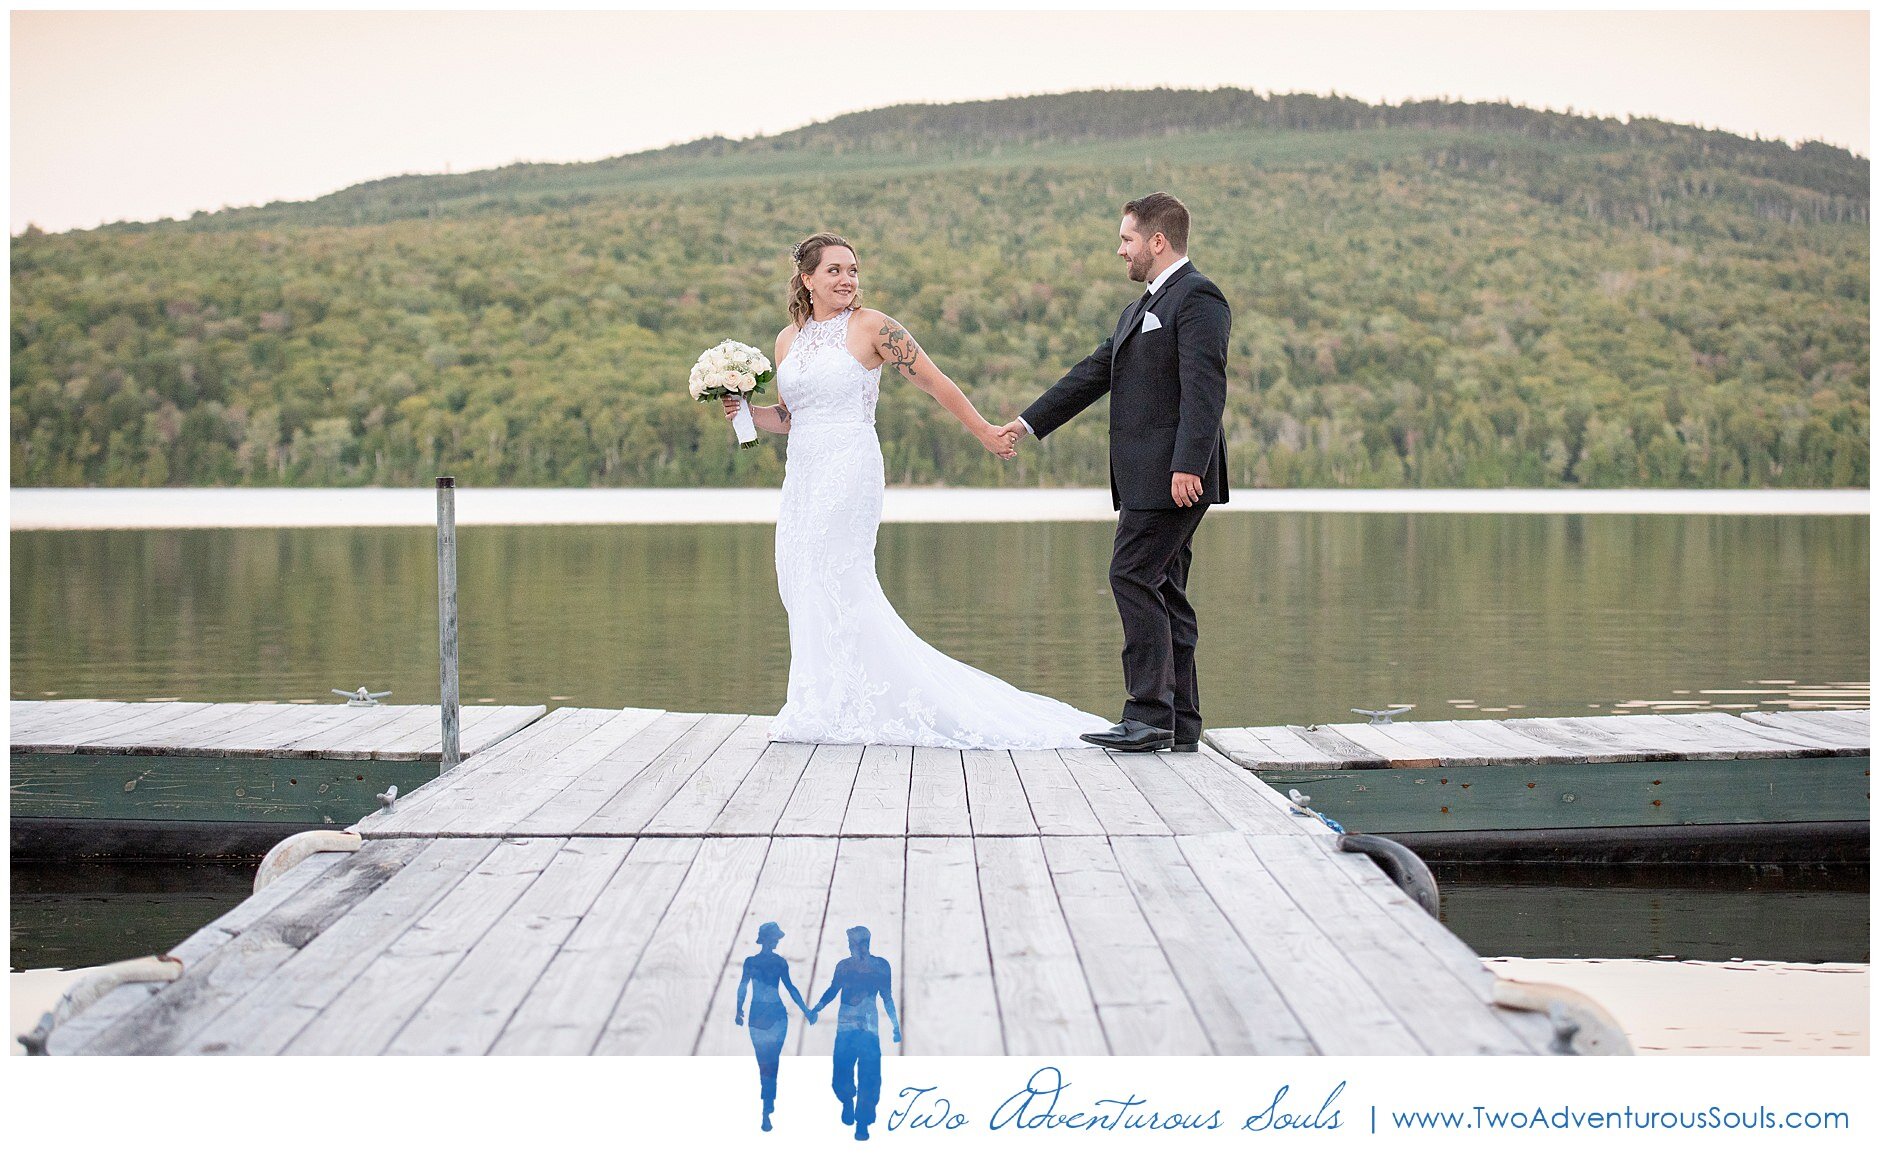 Lake Parlin Lodge Wedding Photos, Jackman Maine Wedding Photographers, Two Adventurous Souls - 090520_0041.jpg